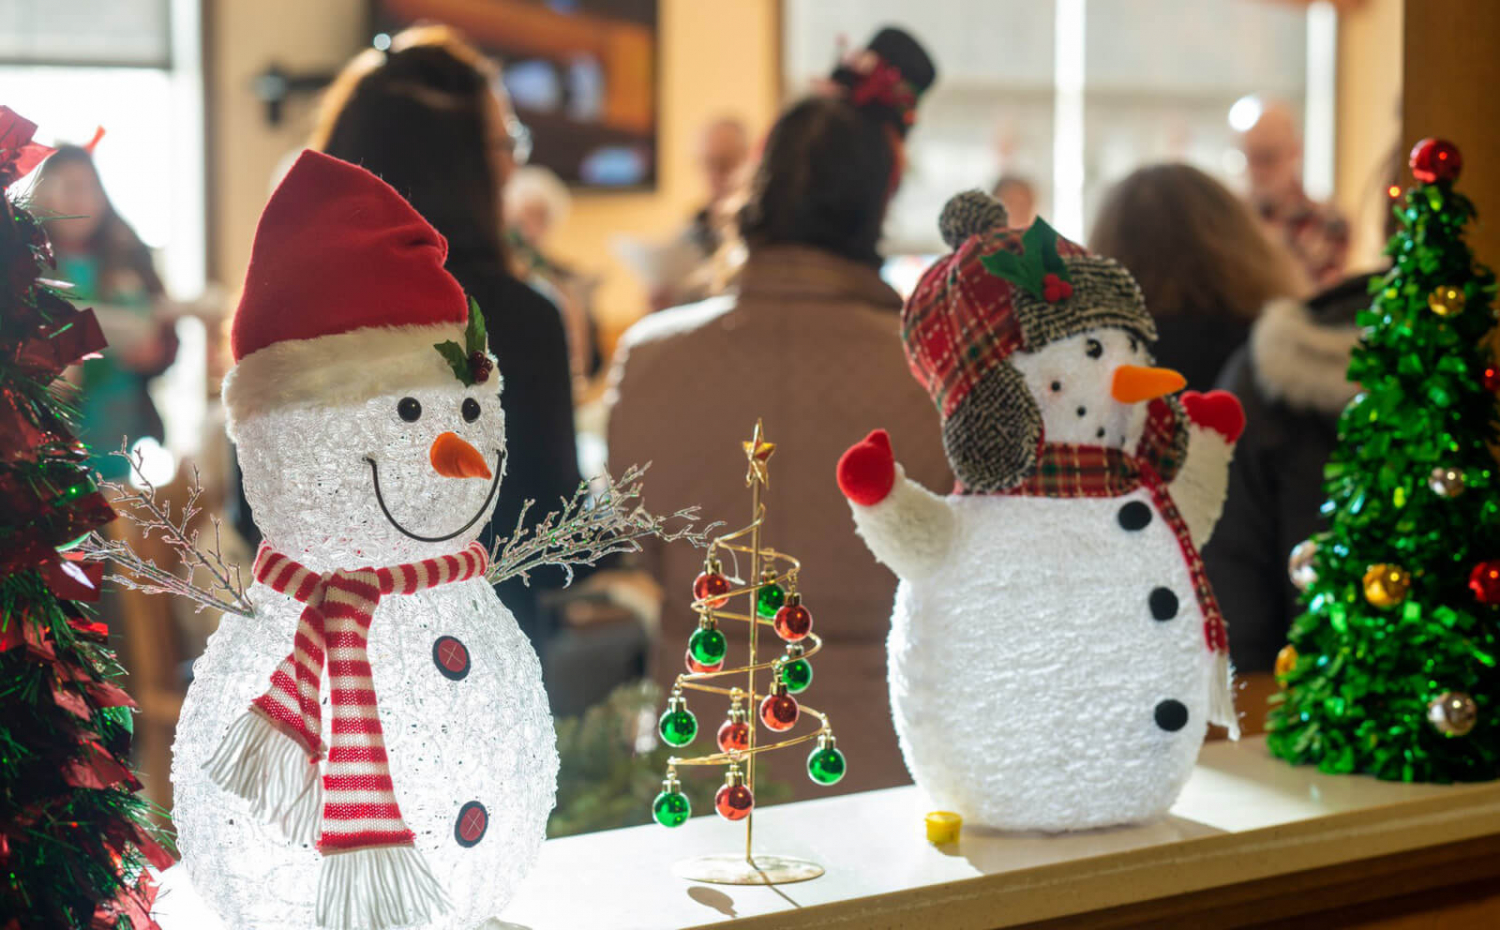 Snowman craft decorations.